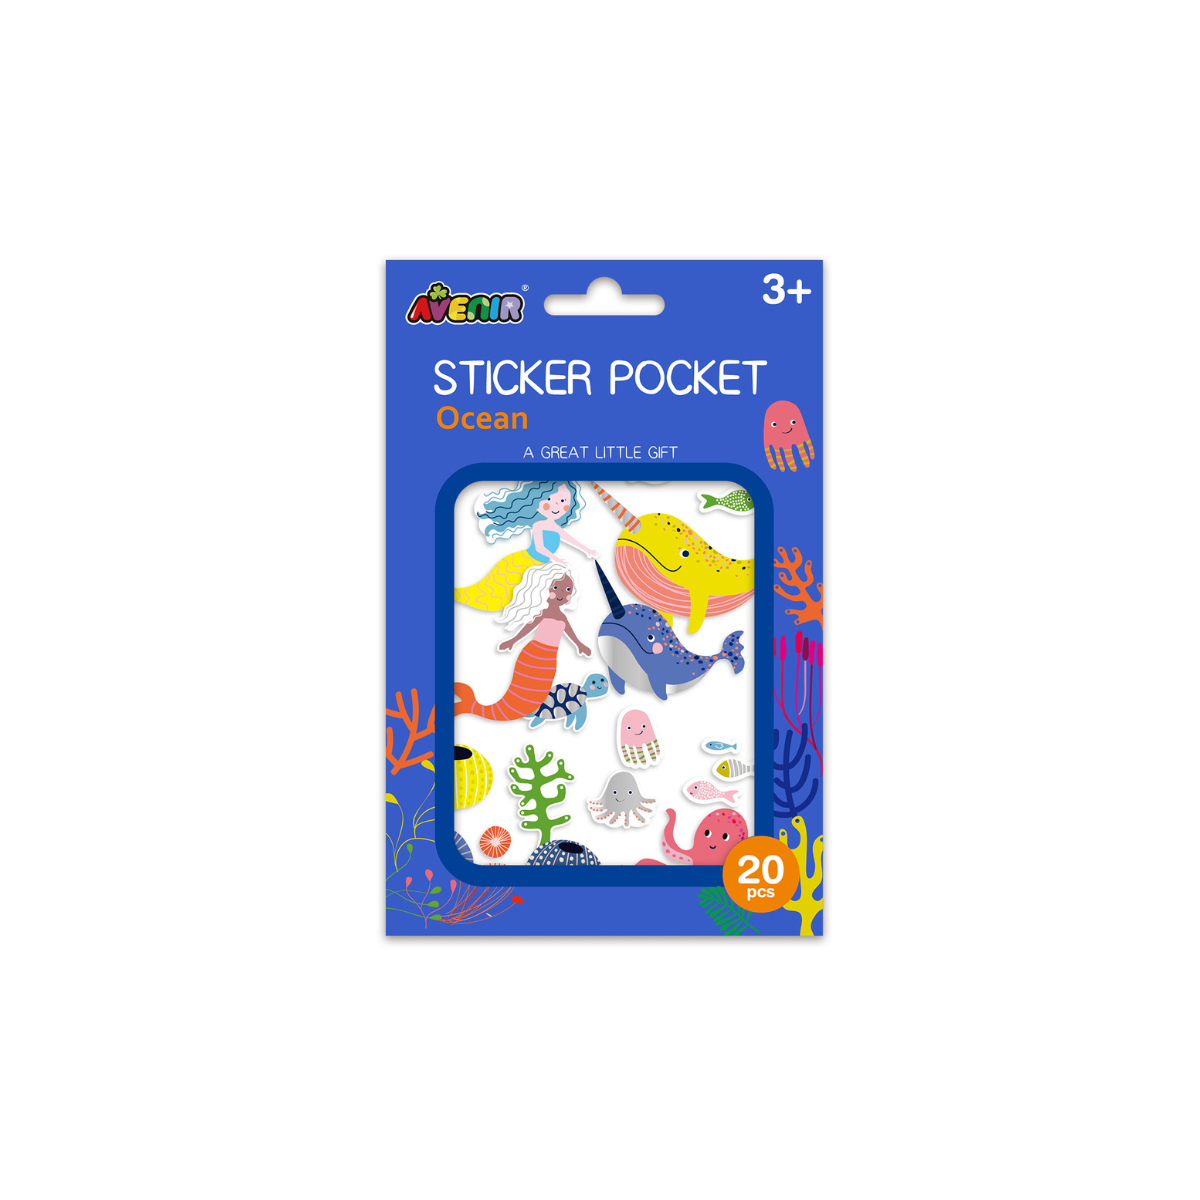 Sticker Pocket